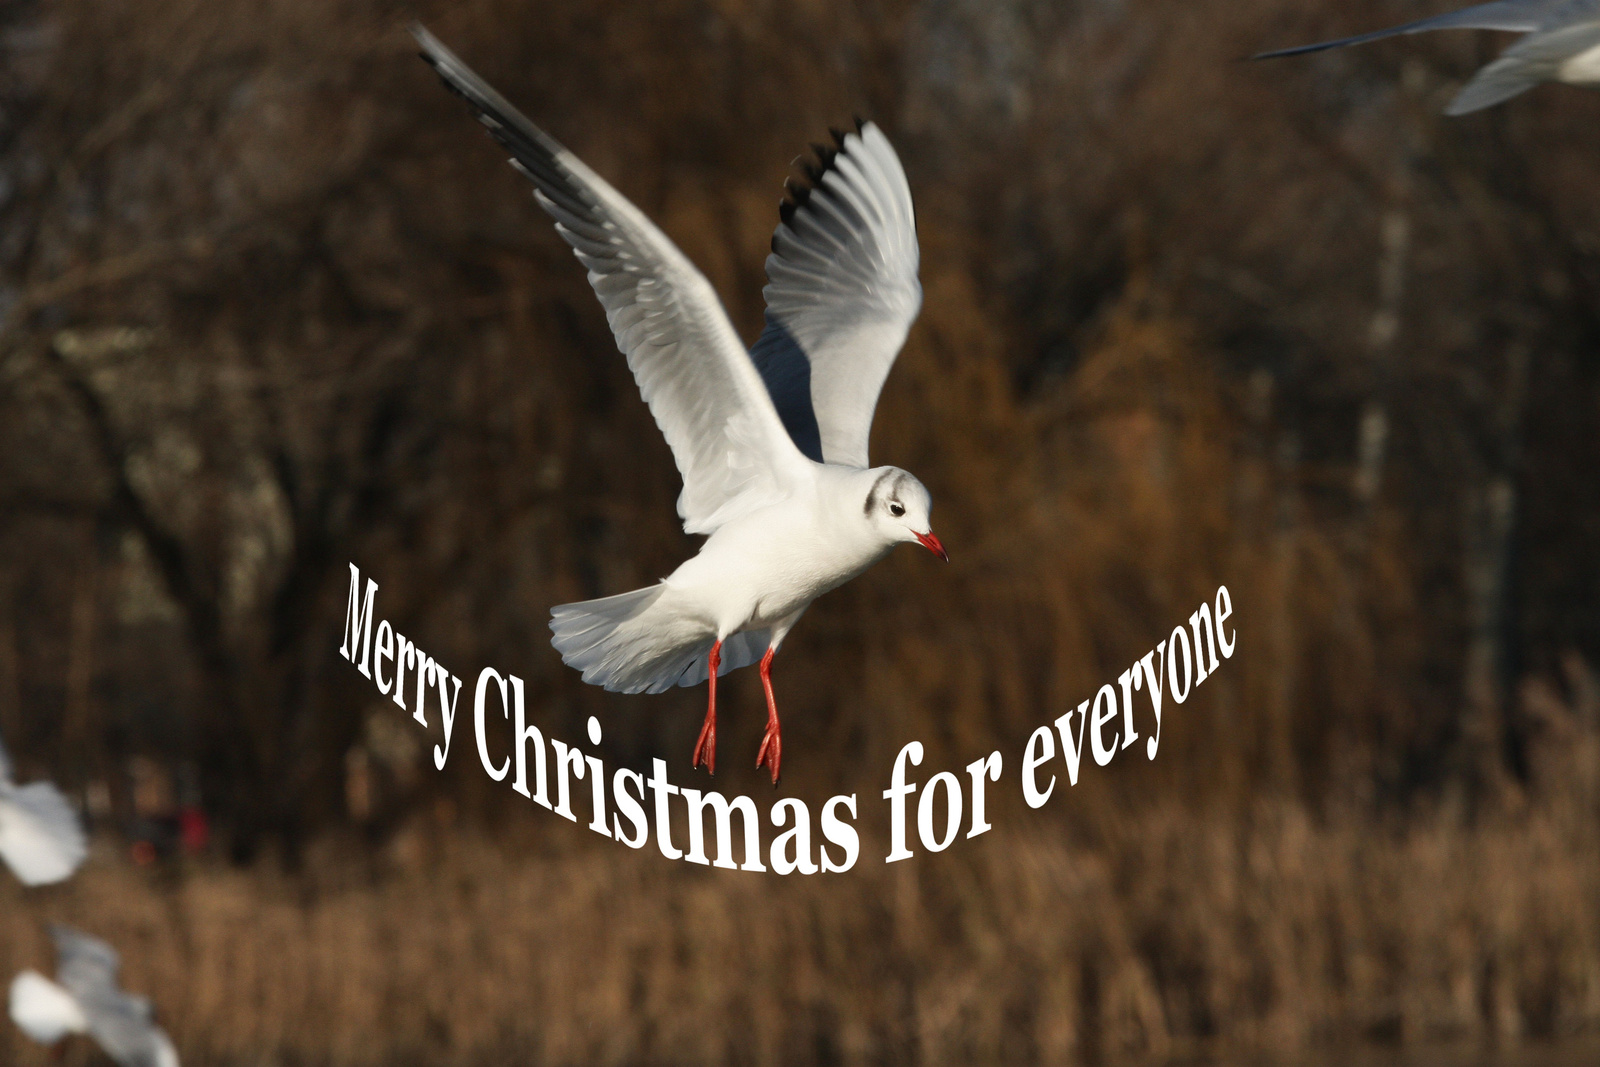 Merry Christmas for everyone